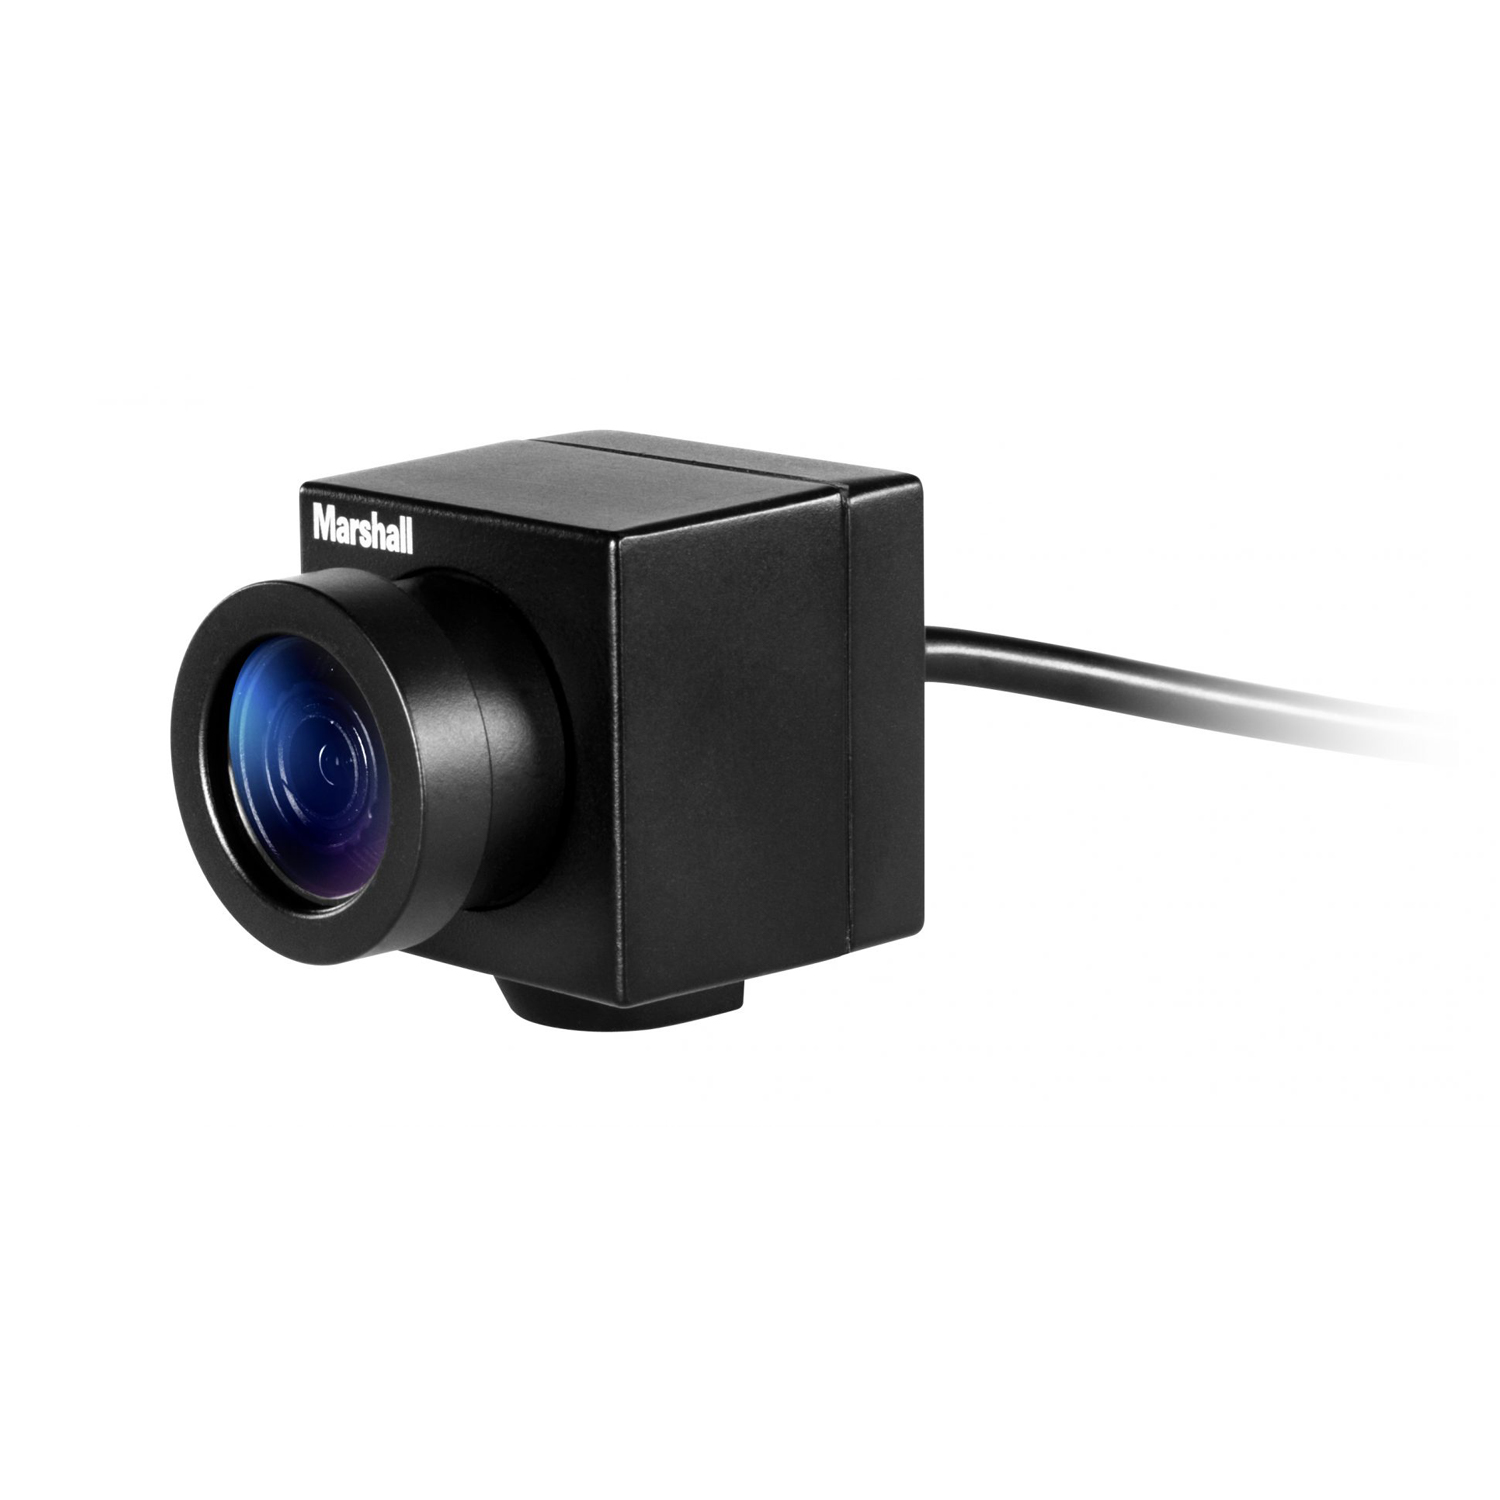 https://tvboynyc.com/wp-content/uploads/2019/03/Marshall-HD-Microcams.jpg